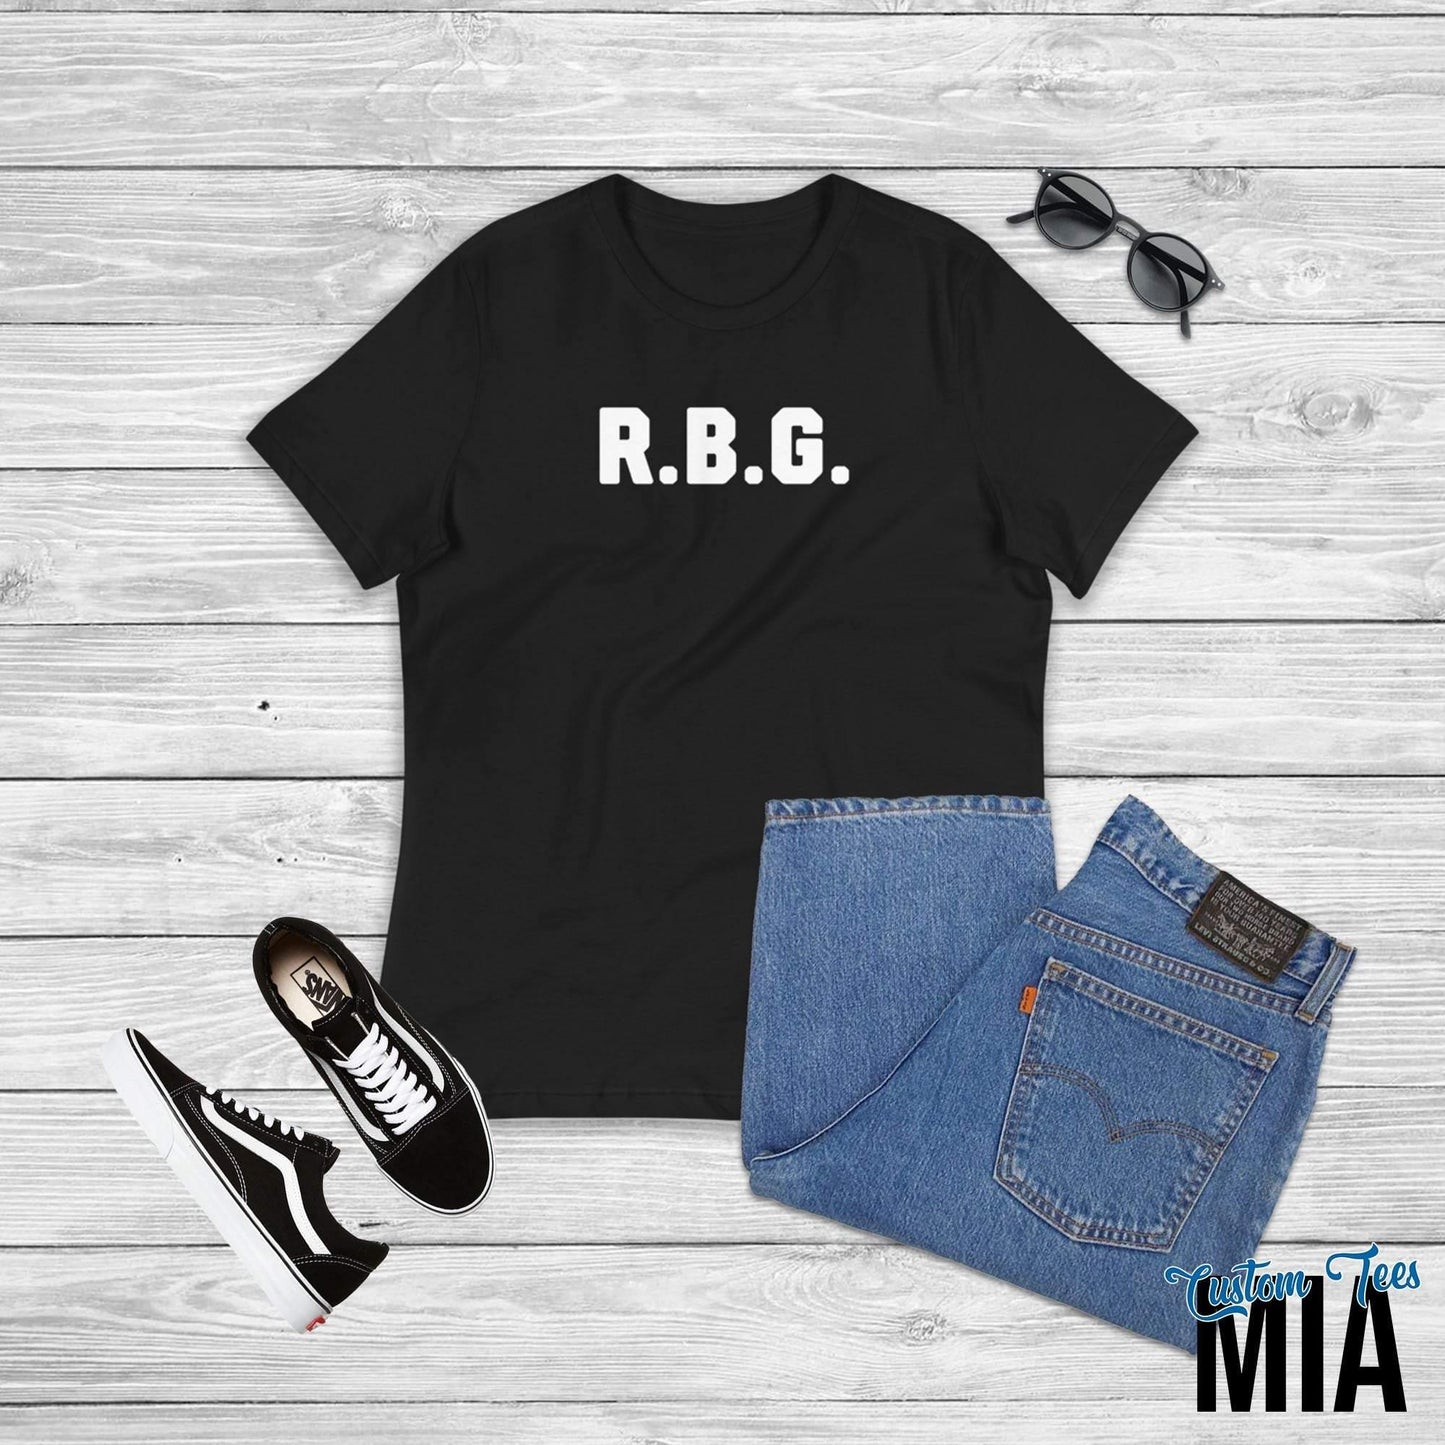 R.B.G. T-Shirt - Ruth Bader Ginsburg Shirt - RBG Shirt - Notorious RBG - Feminist Shirt - Ruth Bader Shirt - I Dissent - Custom Tees MIA